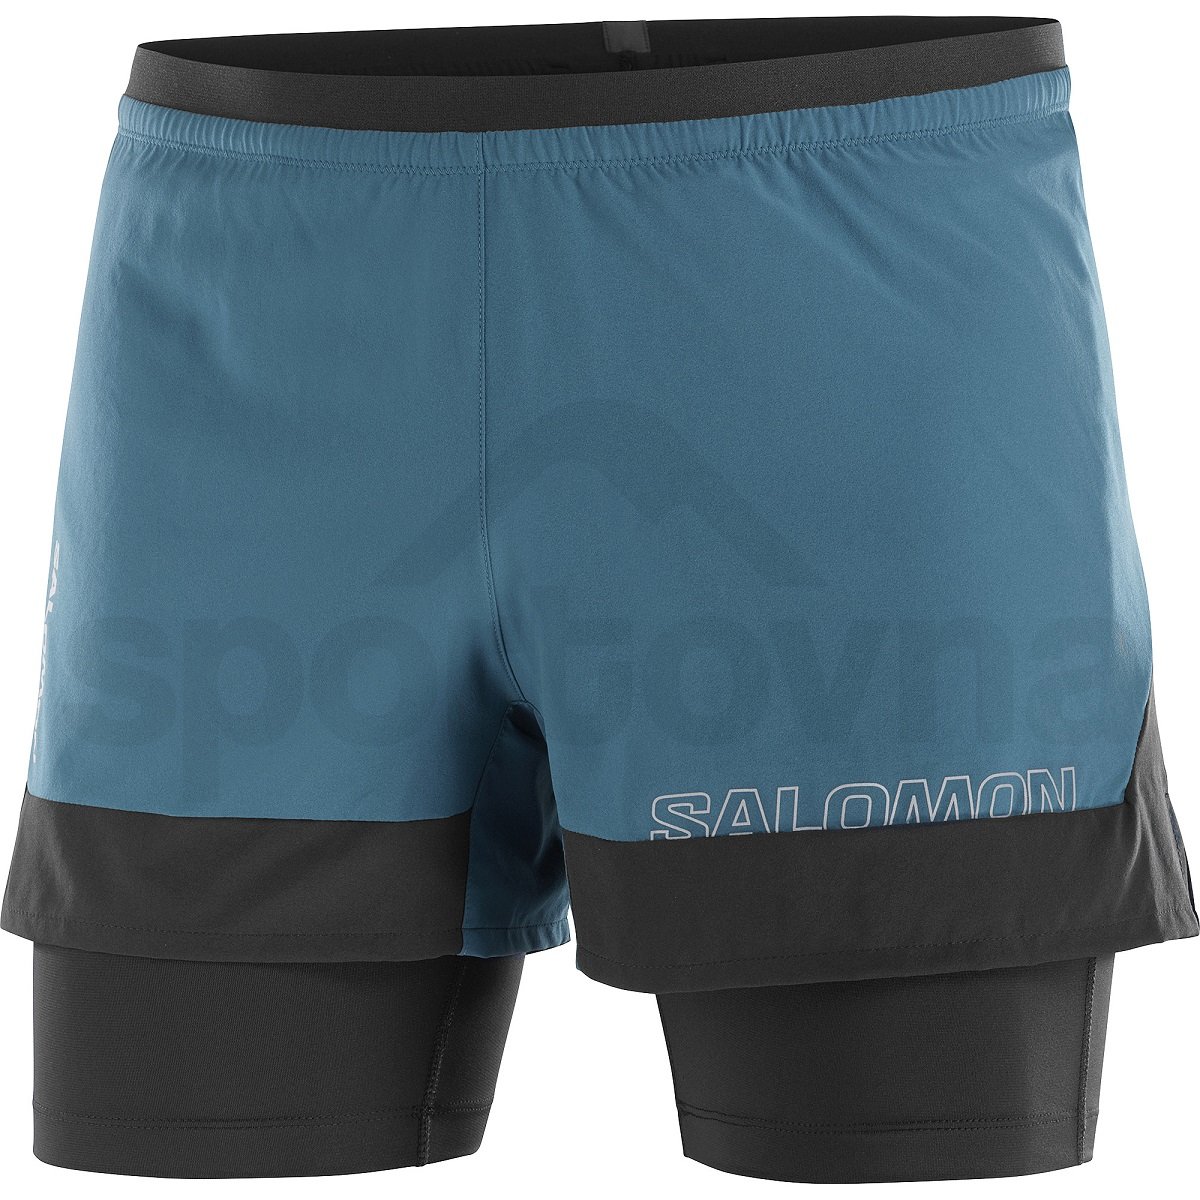 Kraťasy Salomon Cross 2IN1 Shorts M - modrá/černá